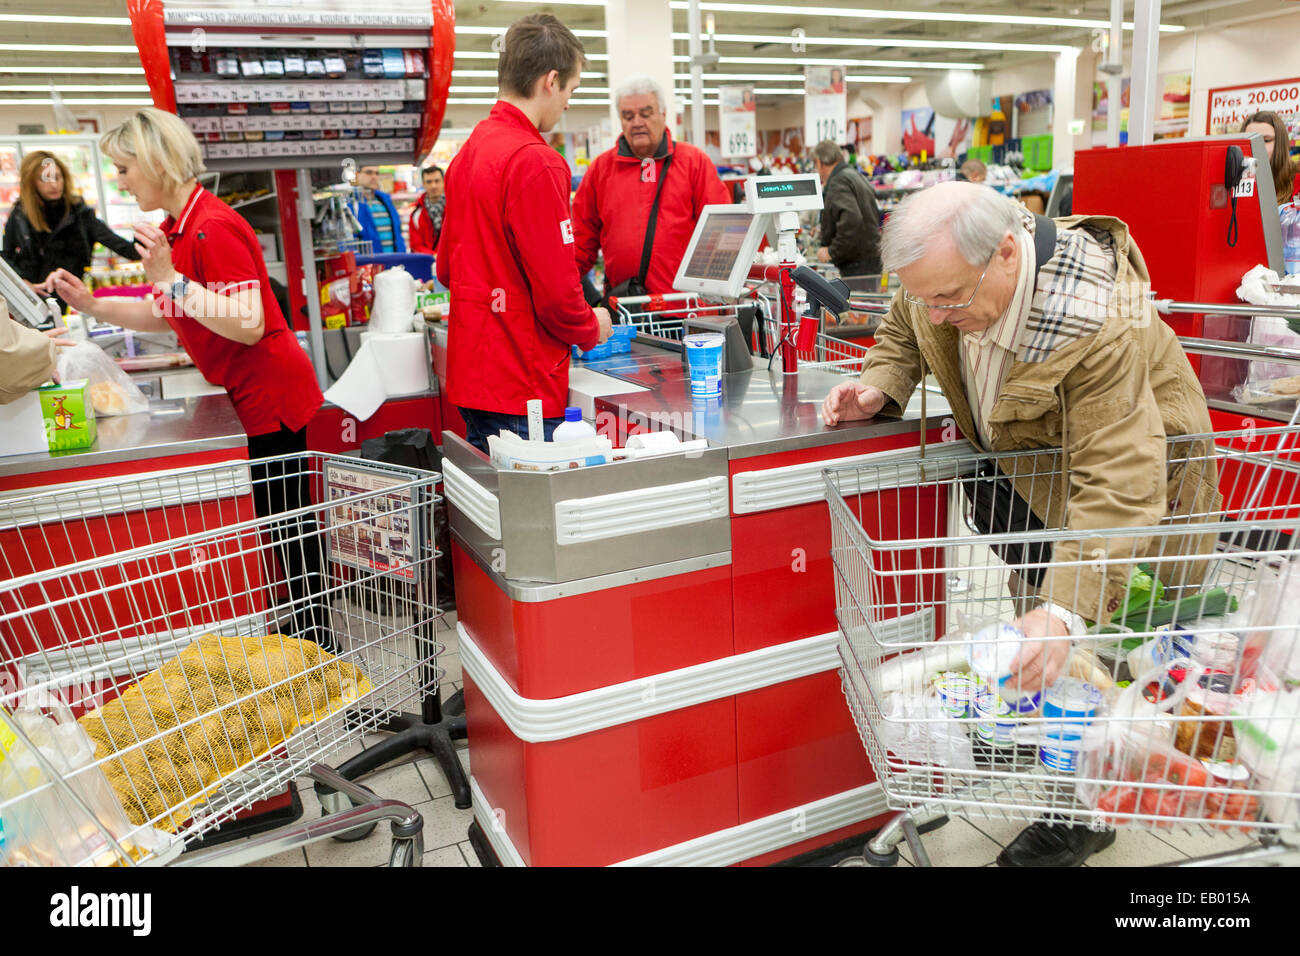 People shopping Shoppers Supermarket trolley, Prague, Czech Republic checkout supermarket Stock Photo